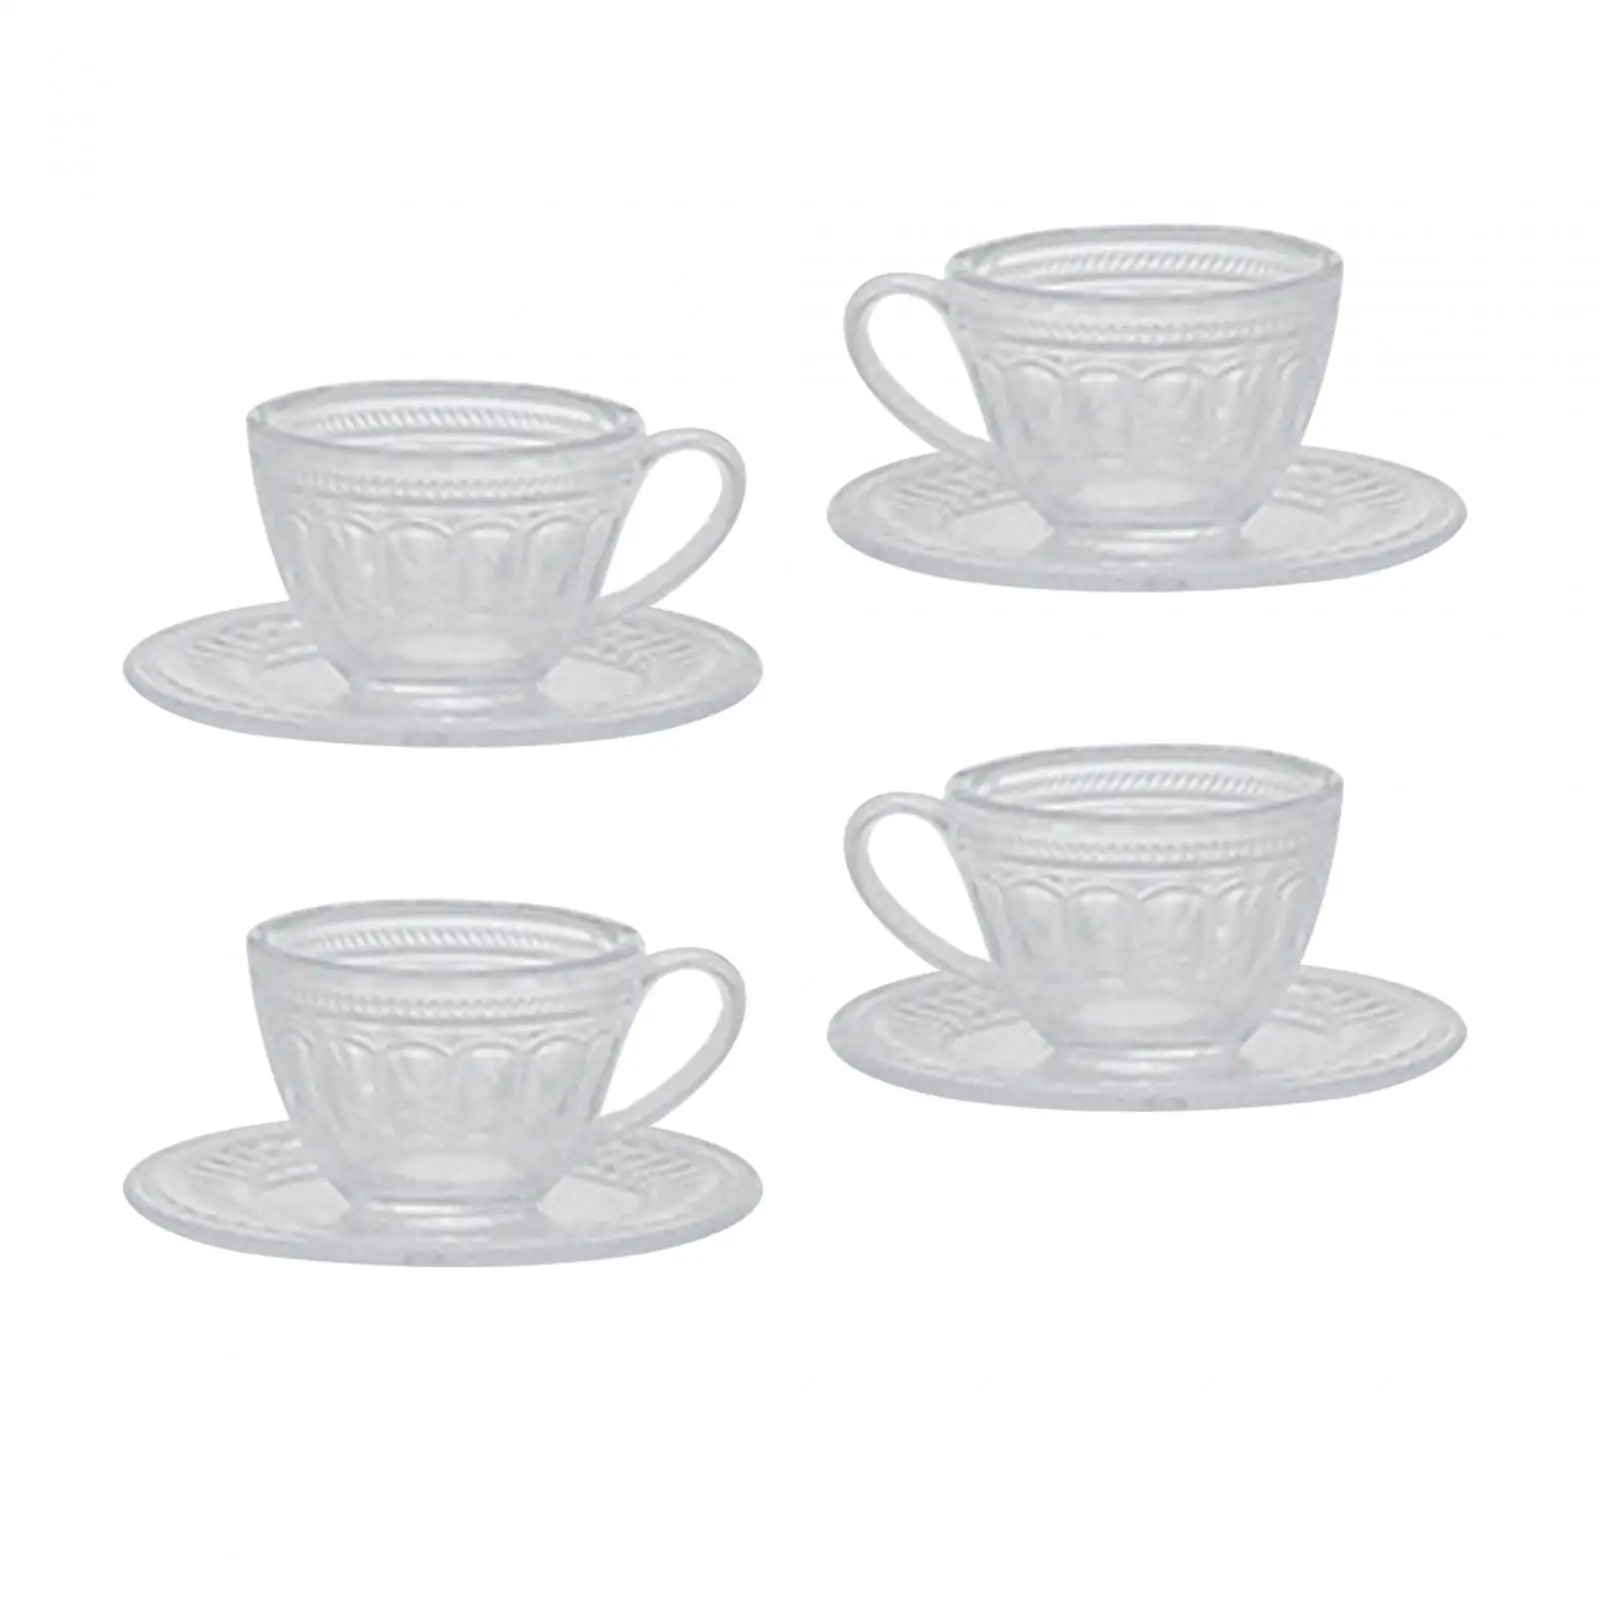 4 Pieces Dollhouse Tea Cup Set 1/6 Miniature Tableware for Diorama Dollhouse